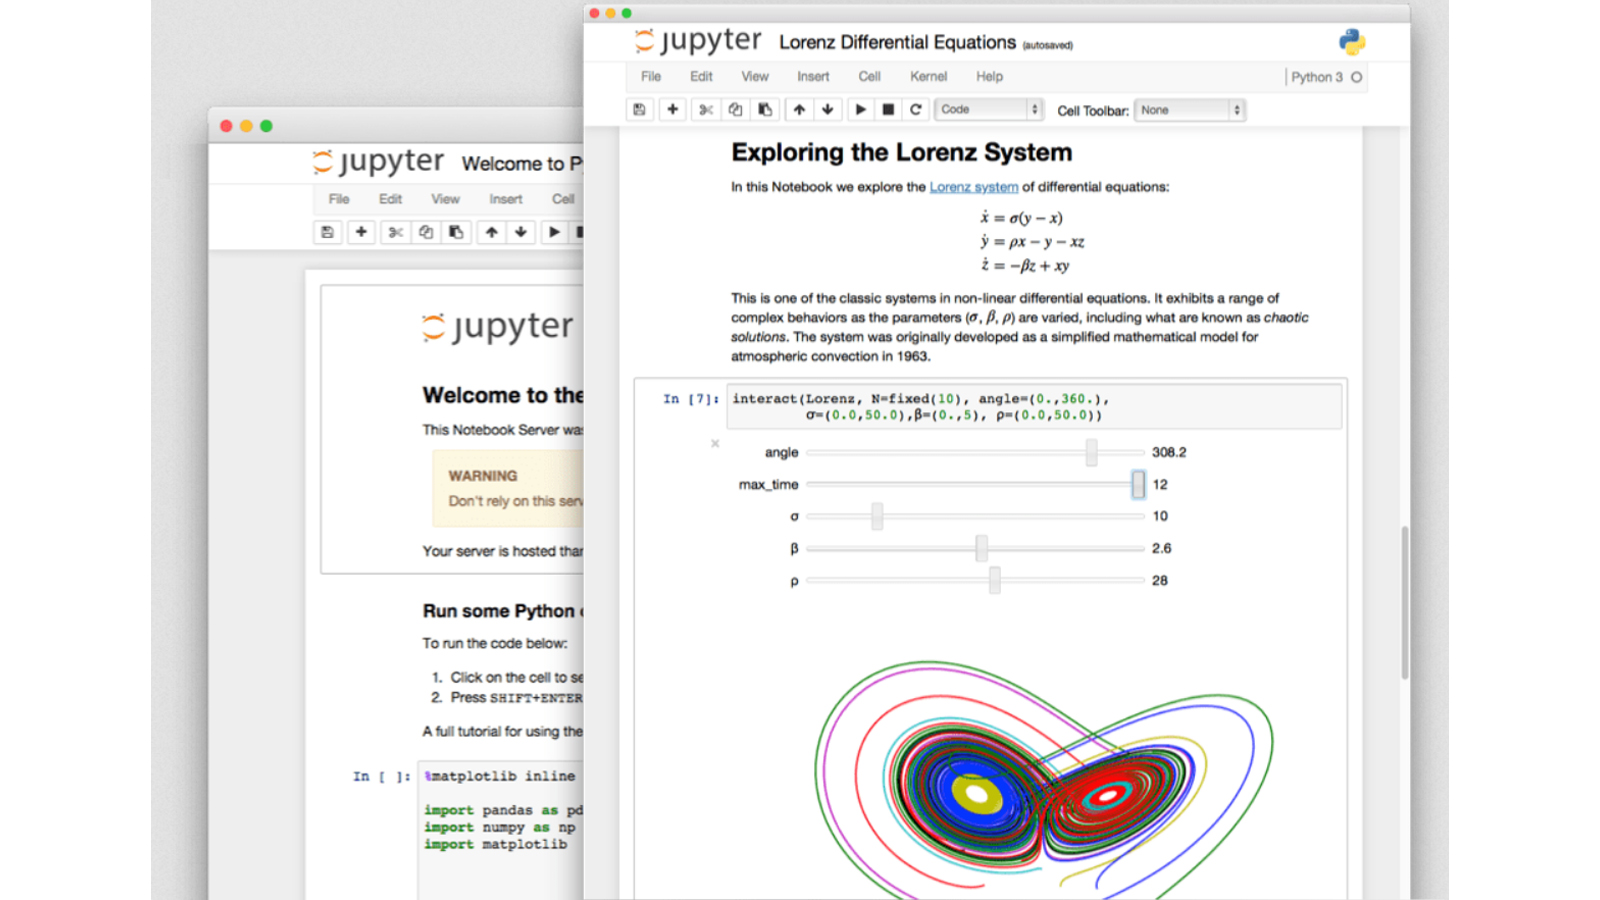 Find detailed information about Jupyter Notebook